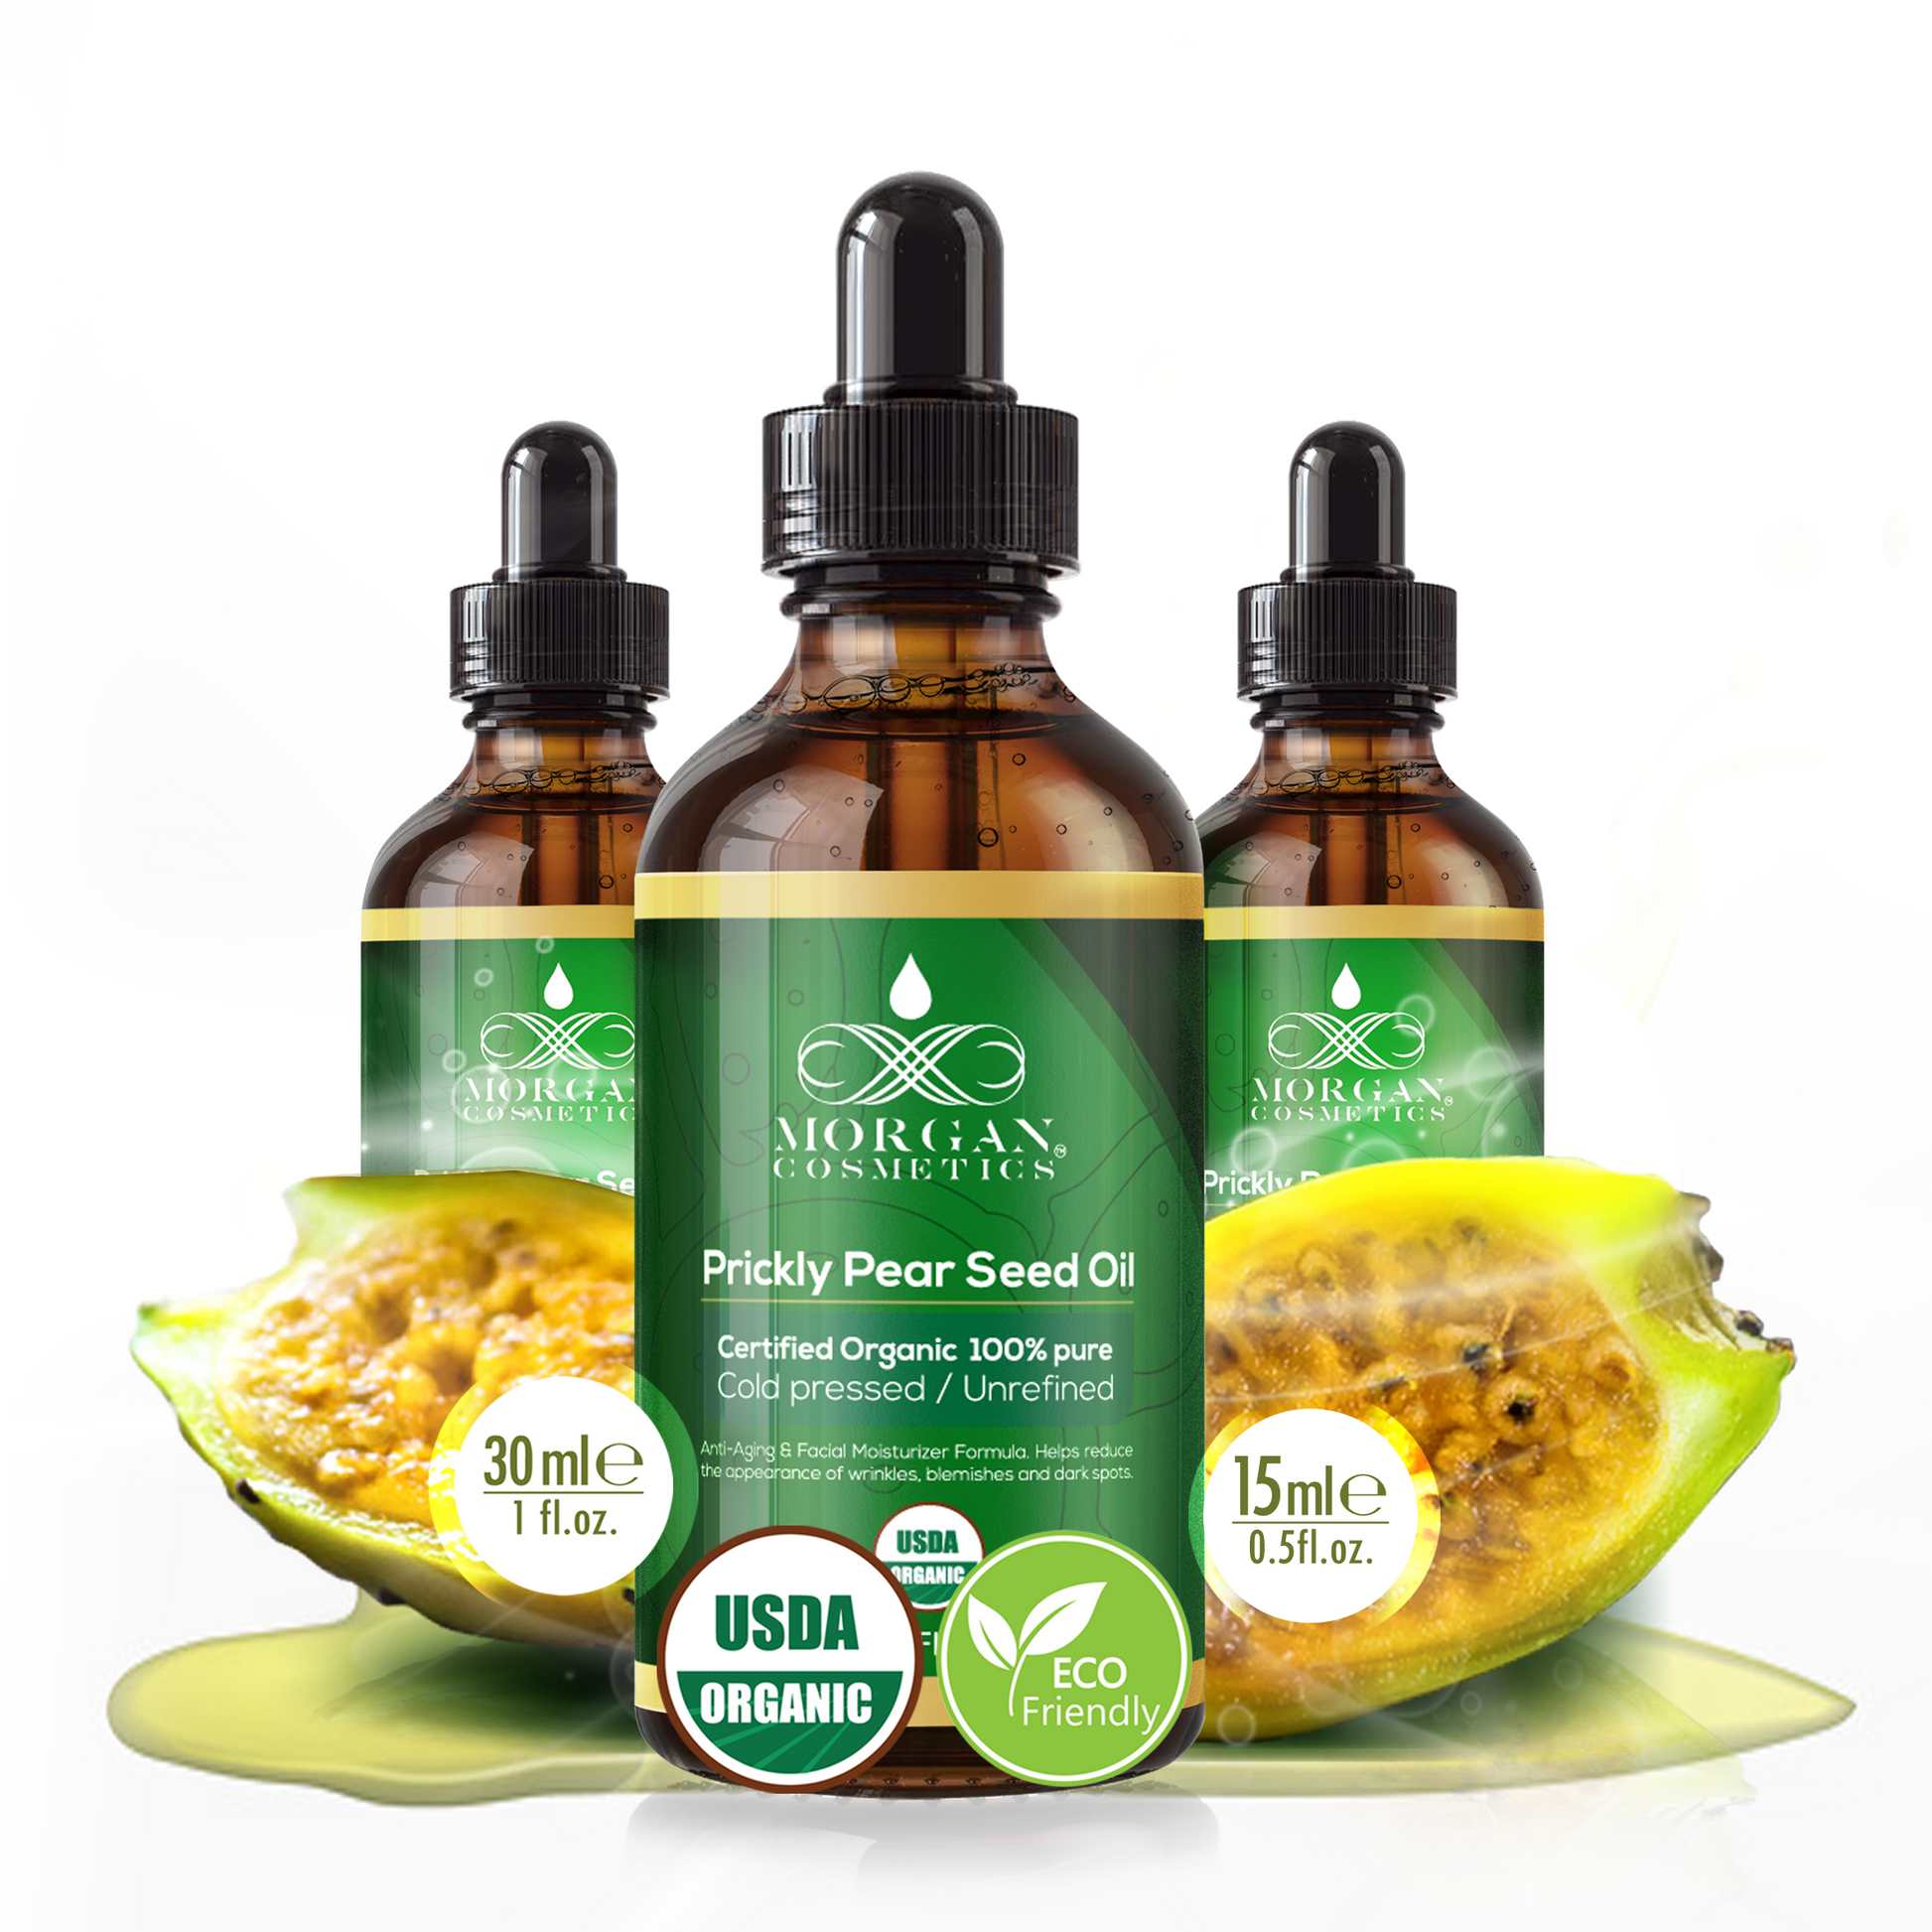 Organic Prickly Pear Seed Oil 1 oz freeshipping - morgancosmeticsofficial